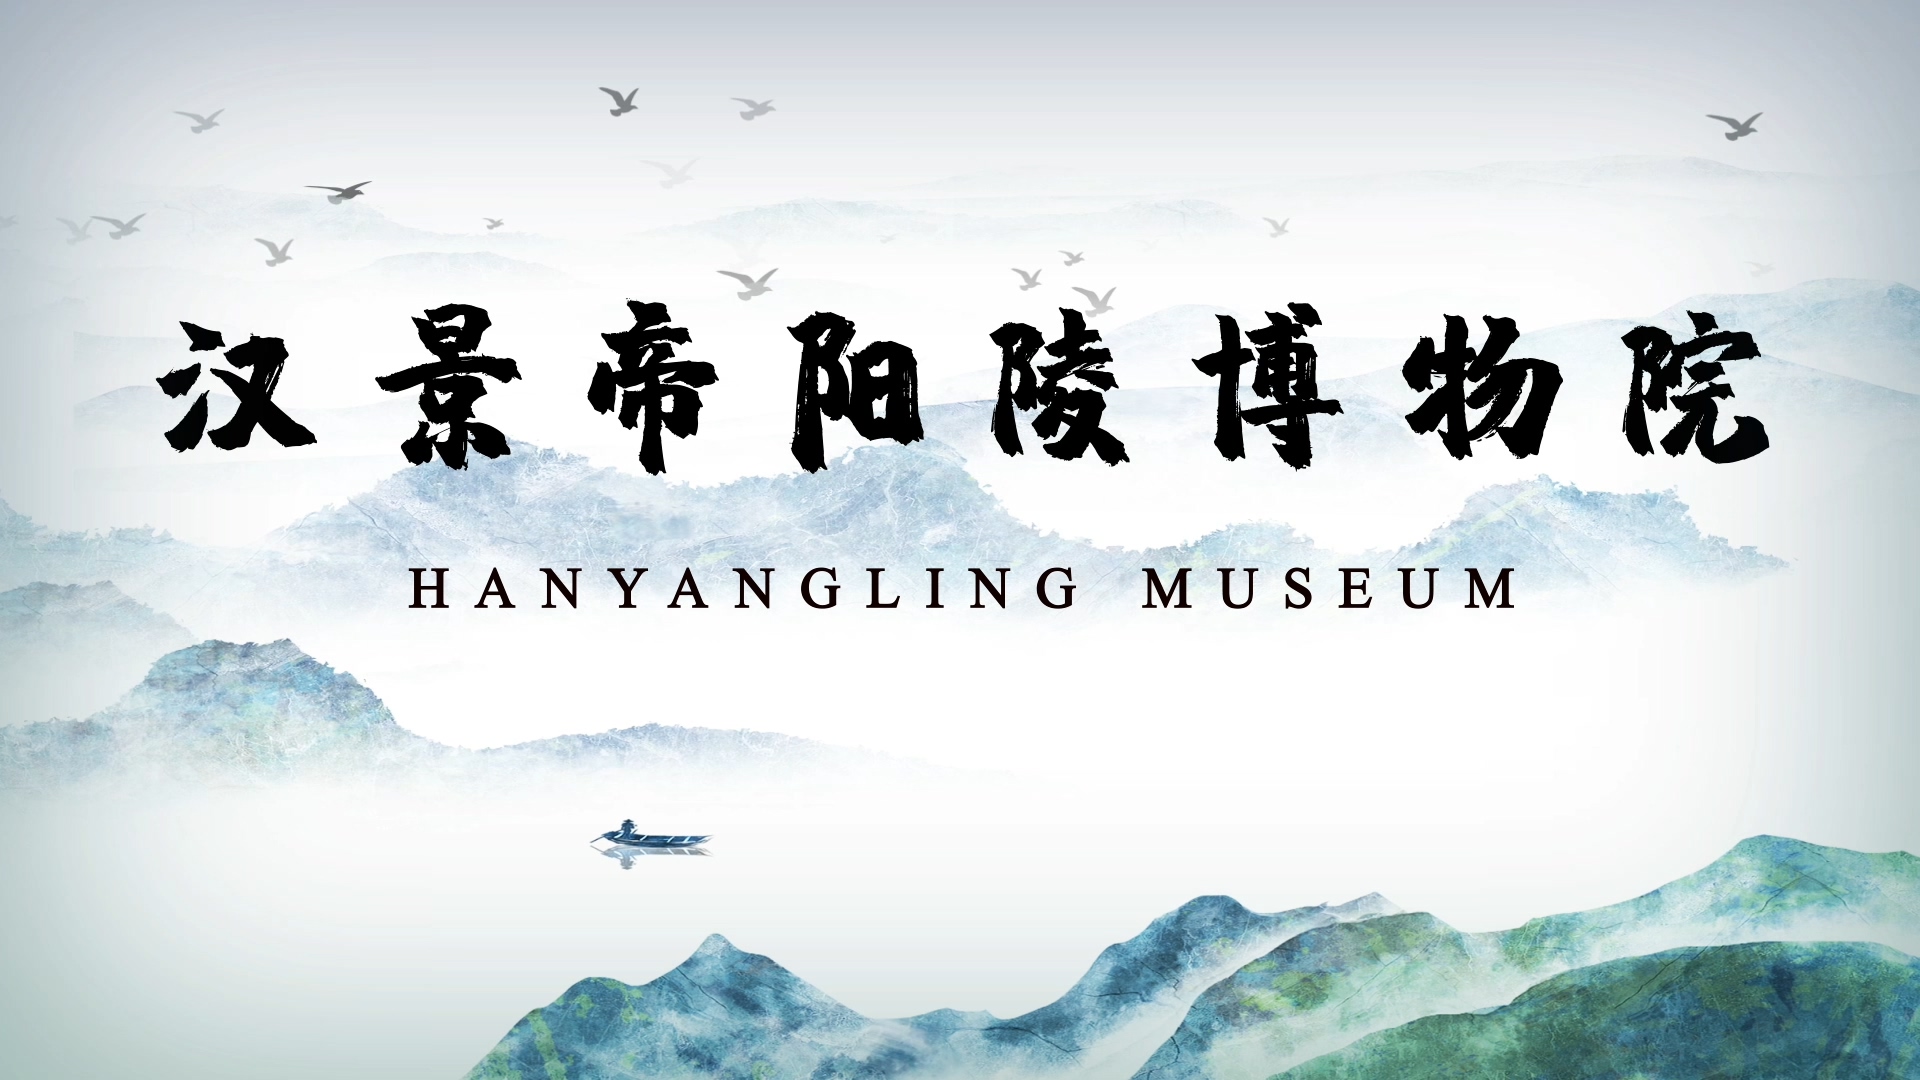 HanYangLing Museum